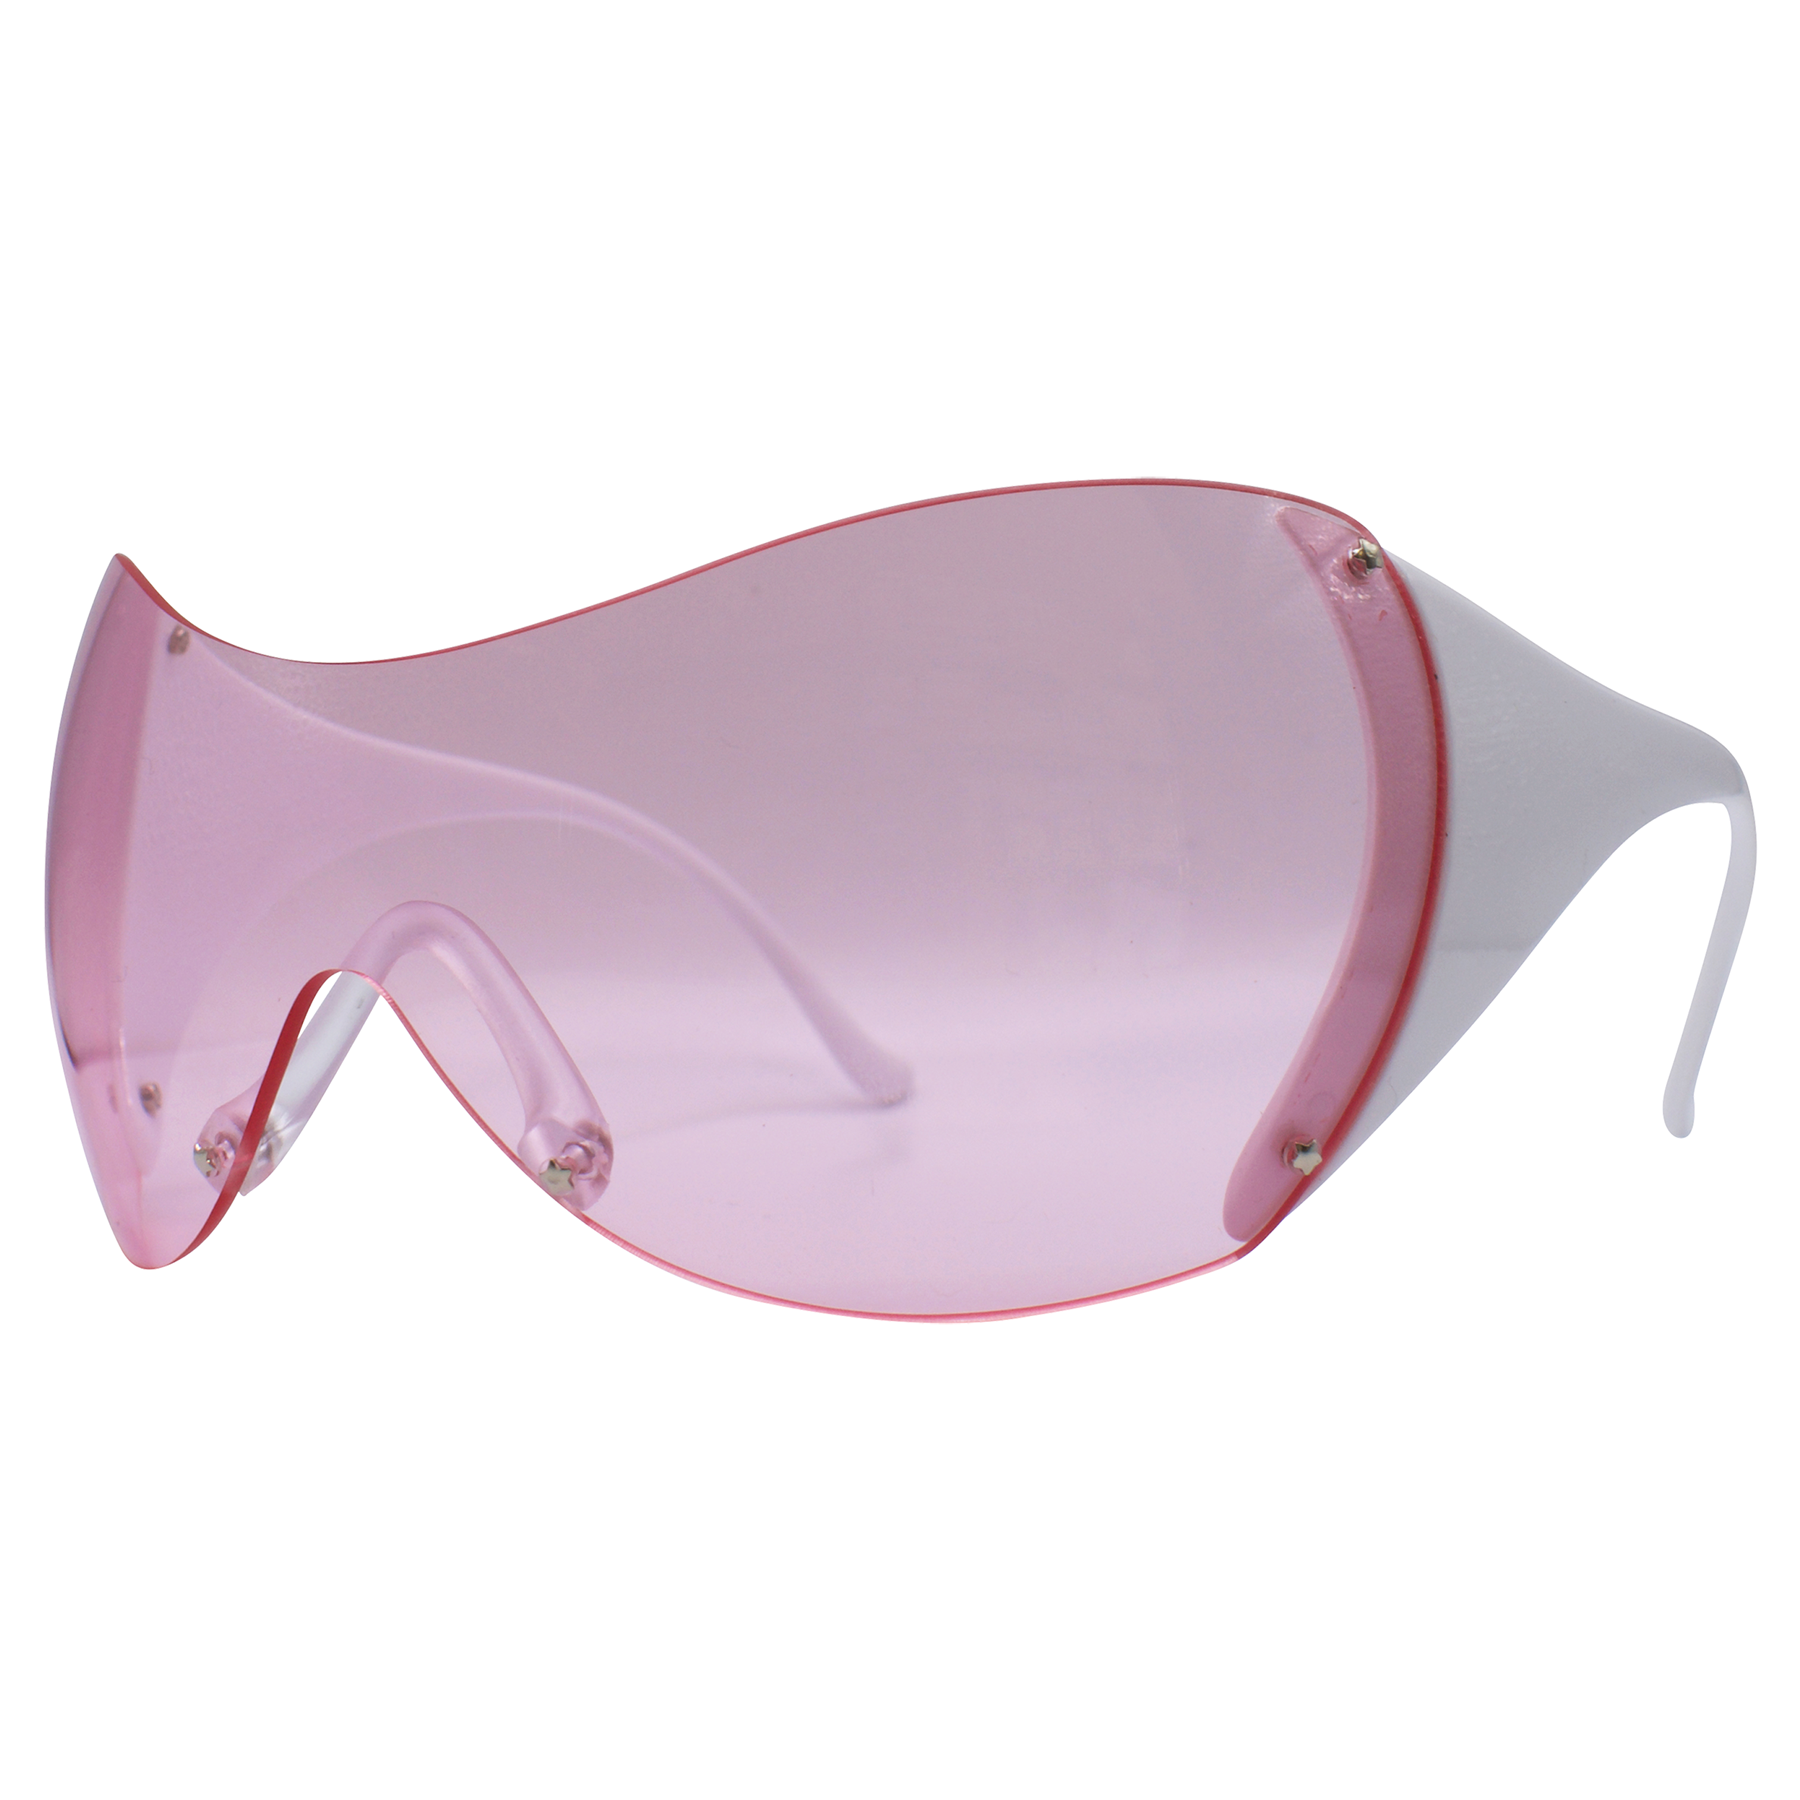 BOOM Shield Sunglasses *As Seen On: Amber Rose & Paris Hilton*